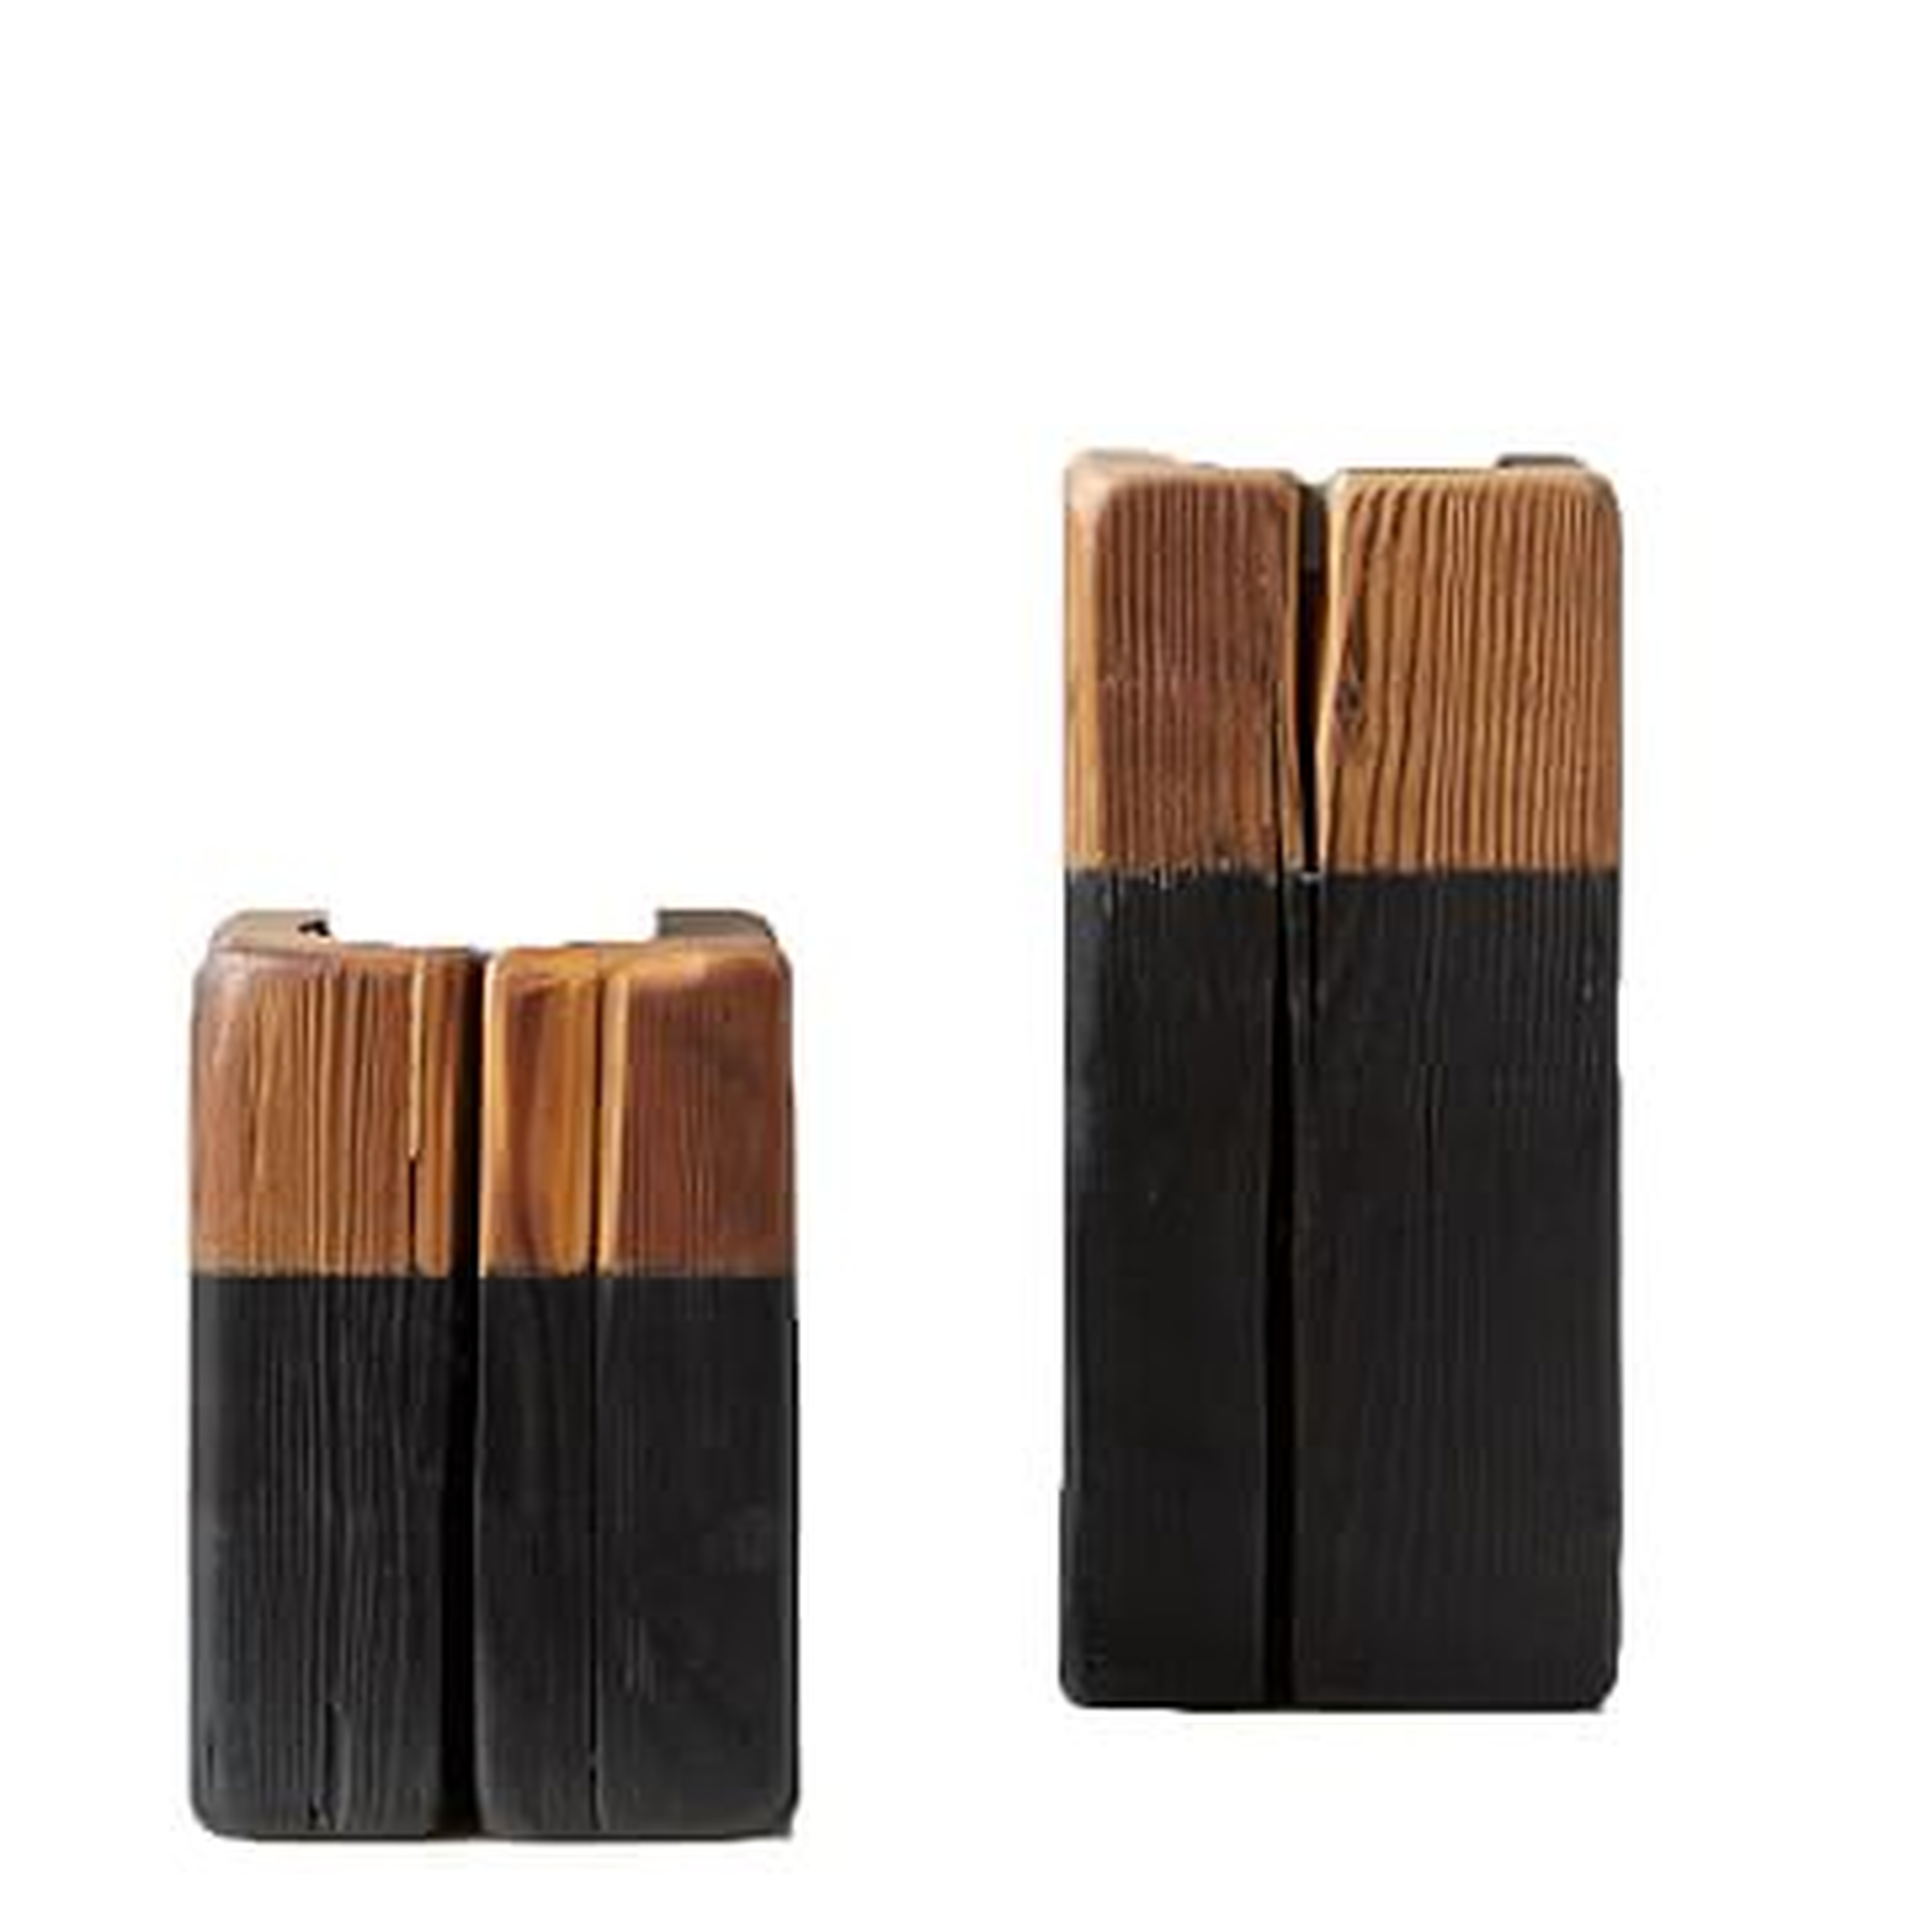 Mod Block Candle Pillars, Wood, Set of 2, Black - West Elm